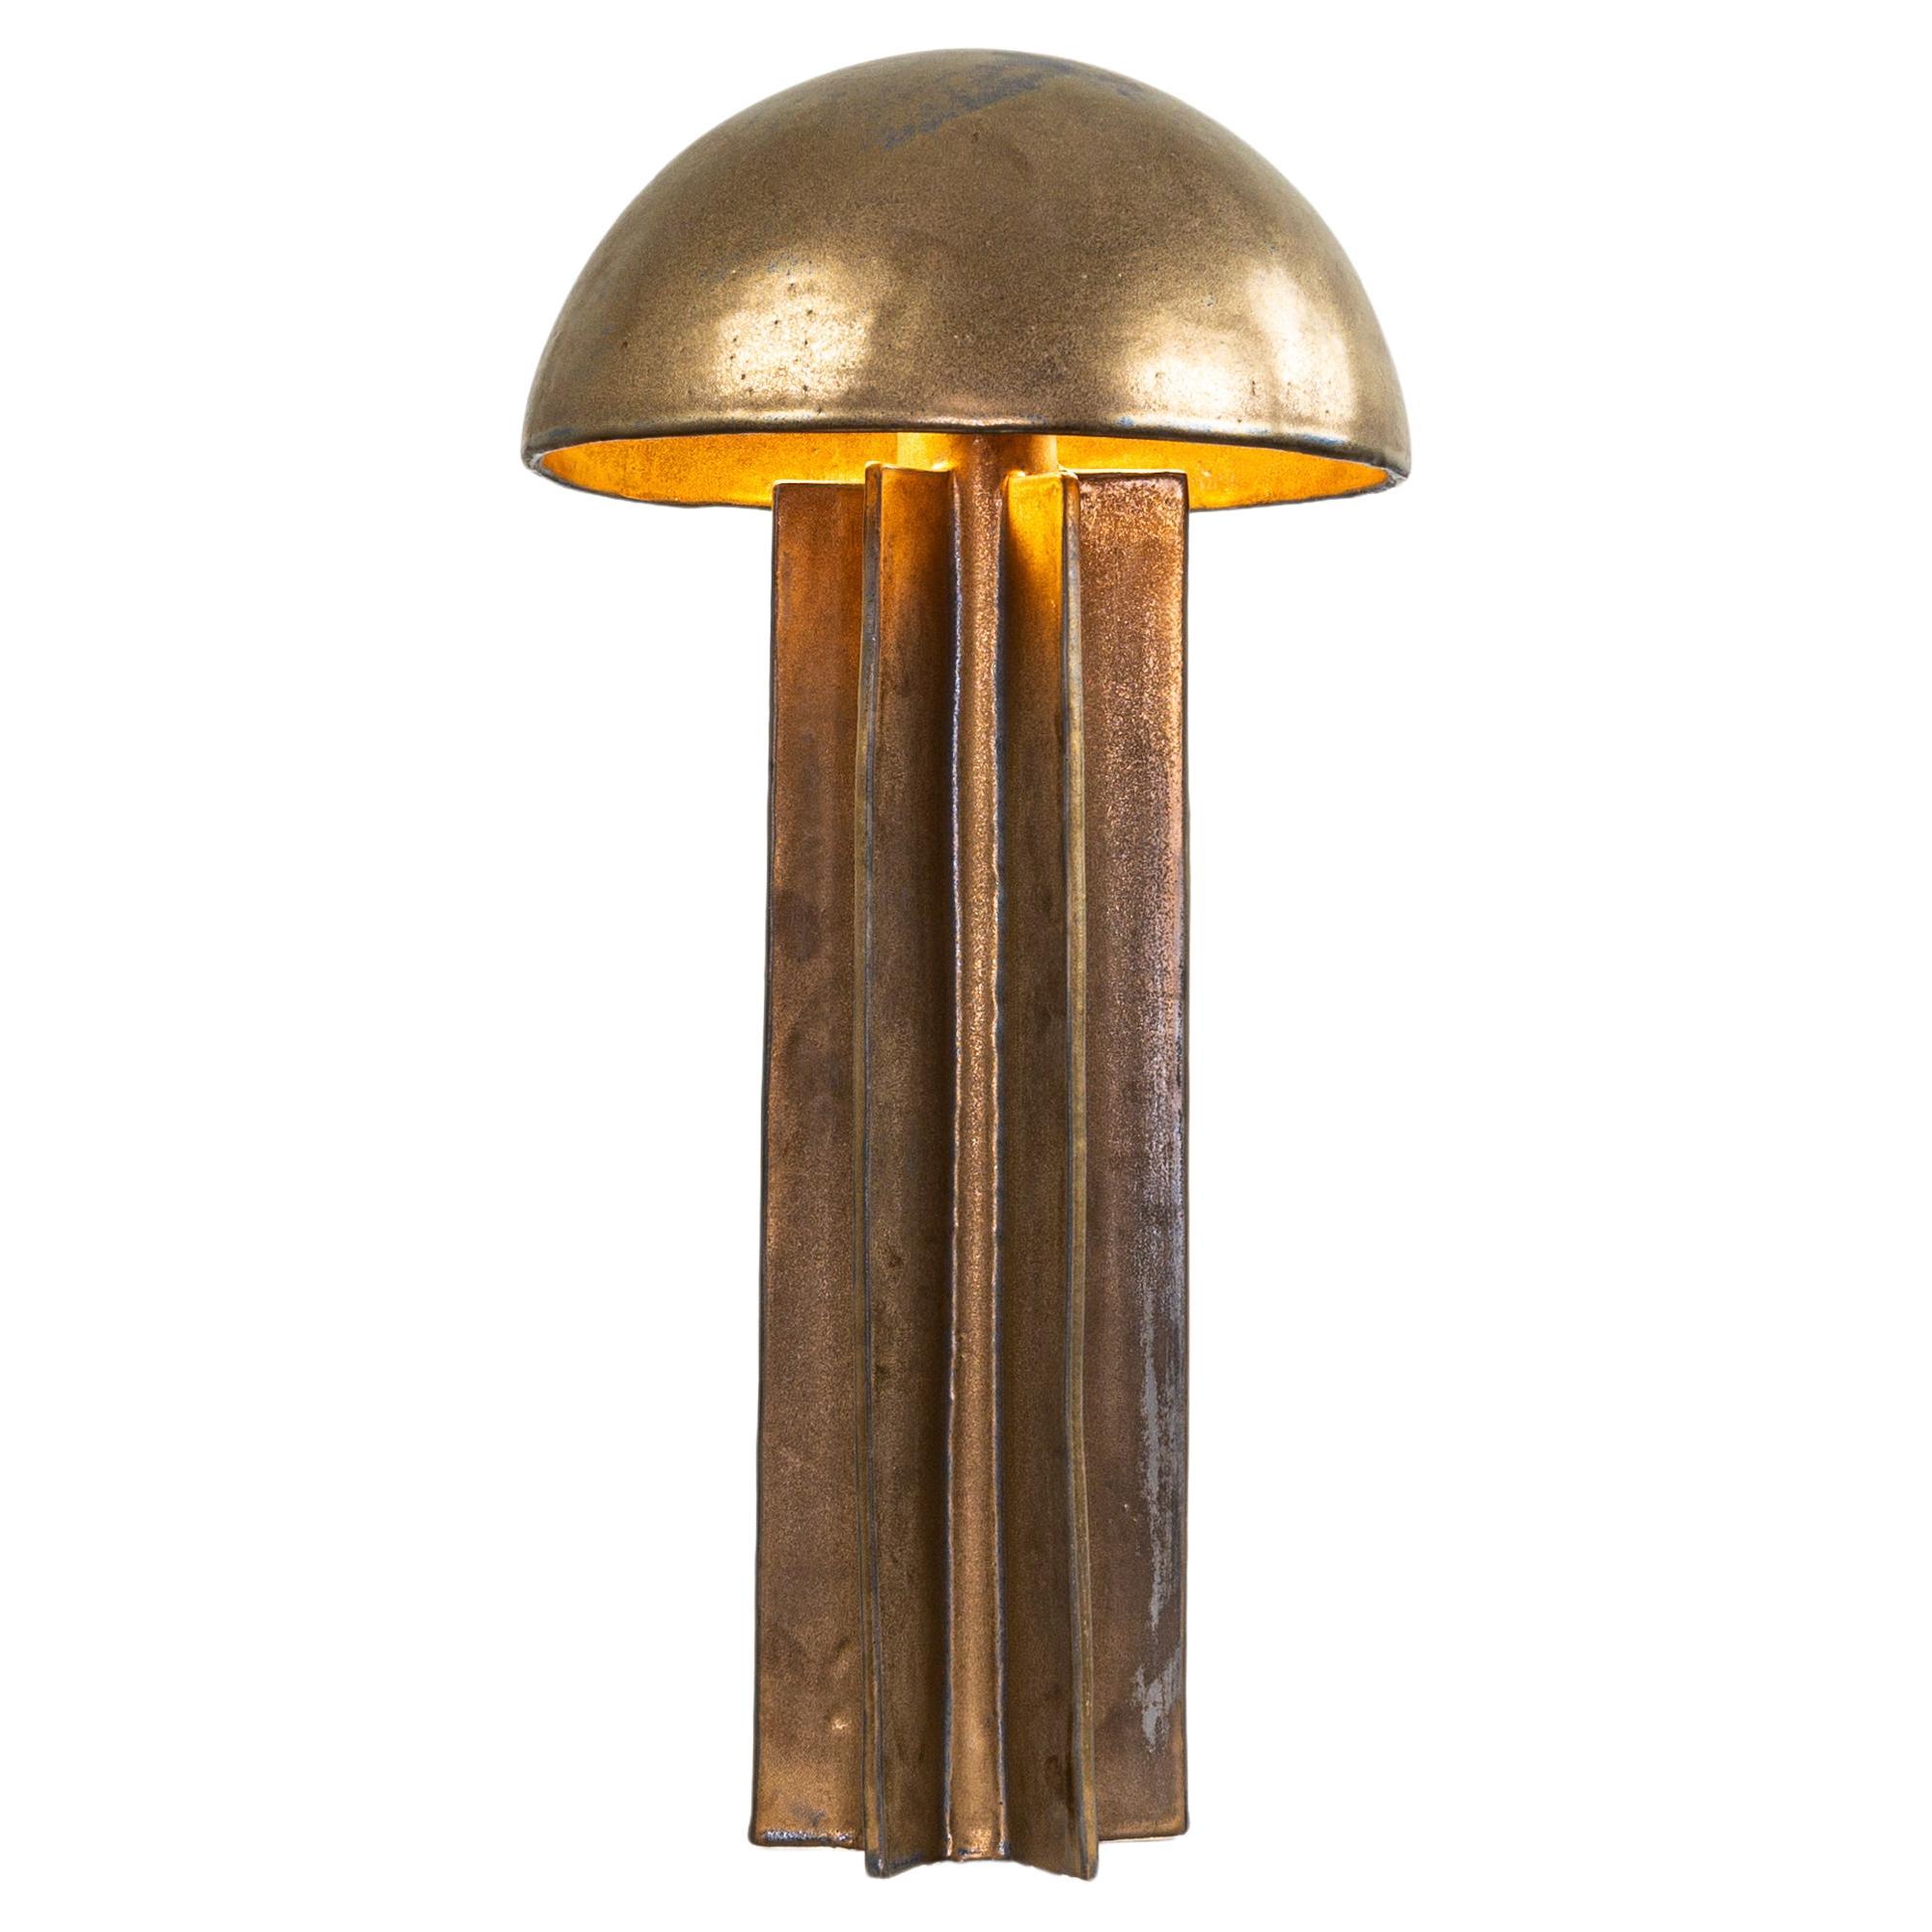 FIN table lamp, gold finish, hanbuilt ceramic dome lamp by Kalin Asenov